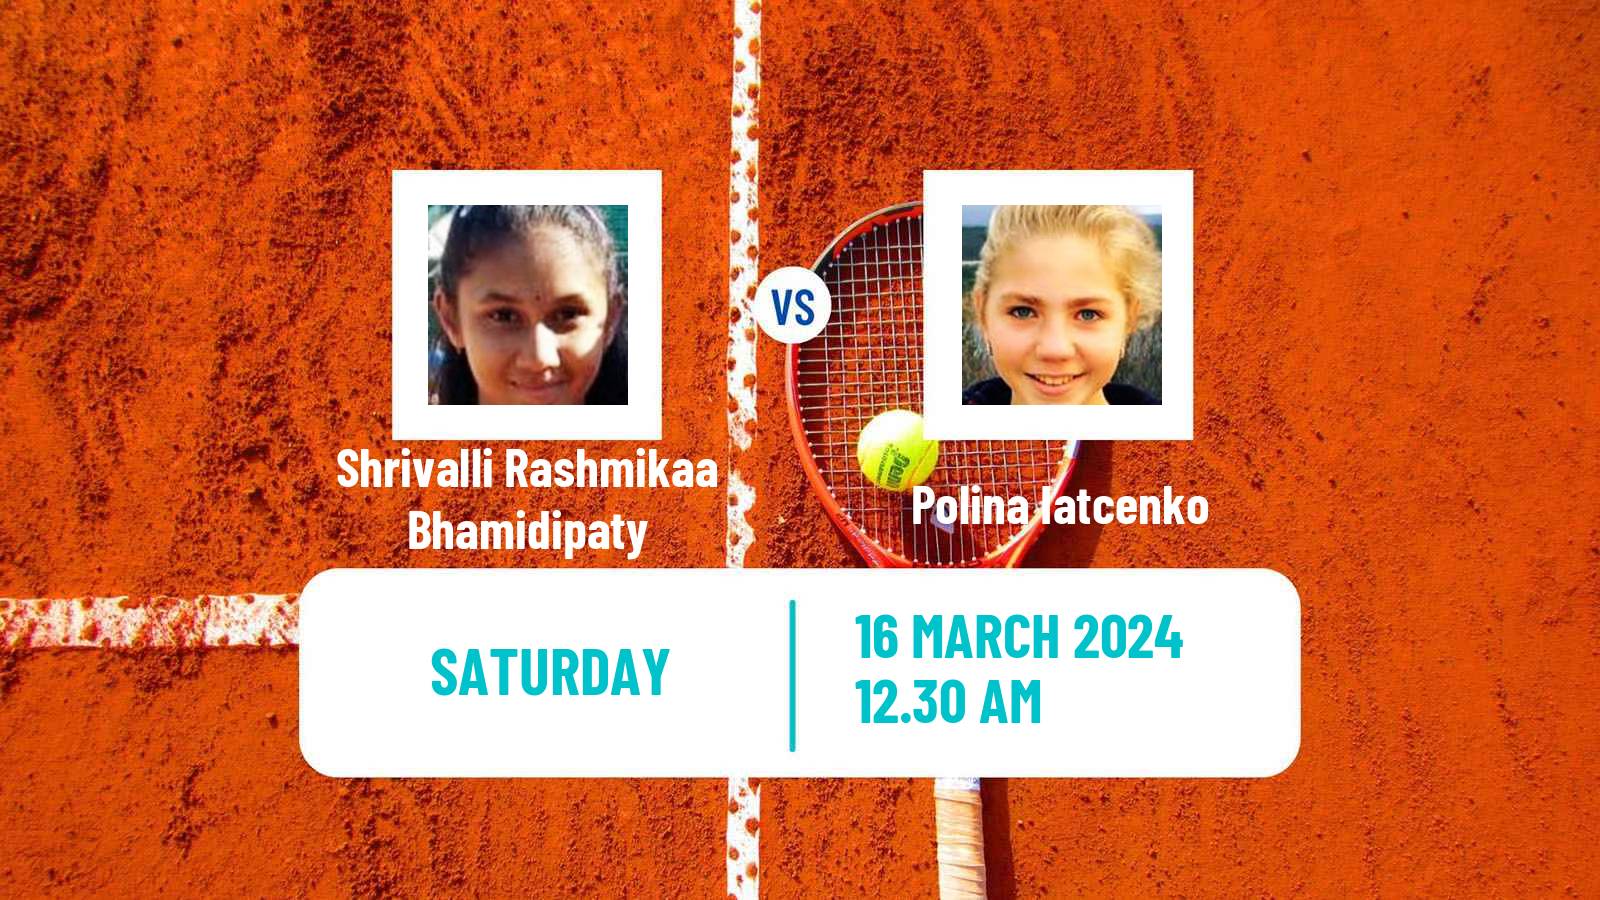 Tennis ITF W35 Indore Women Shrivalli Rashmikaa Bhamidipaty - Polina Iatcenko